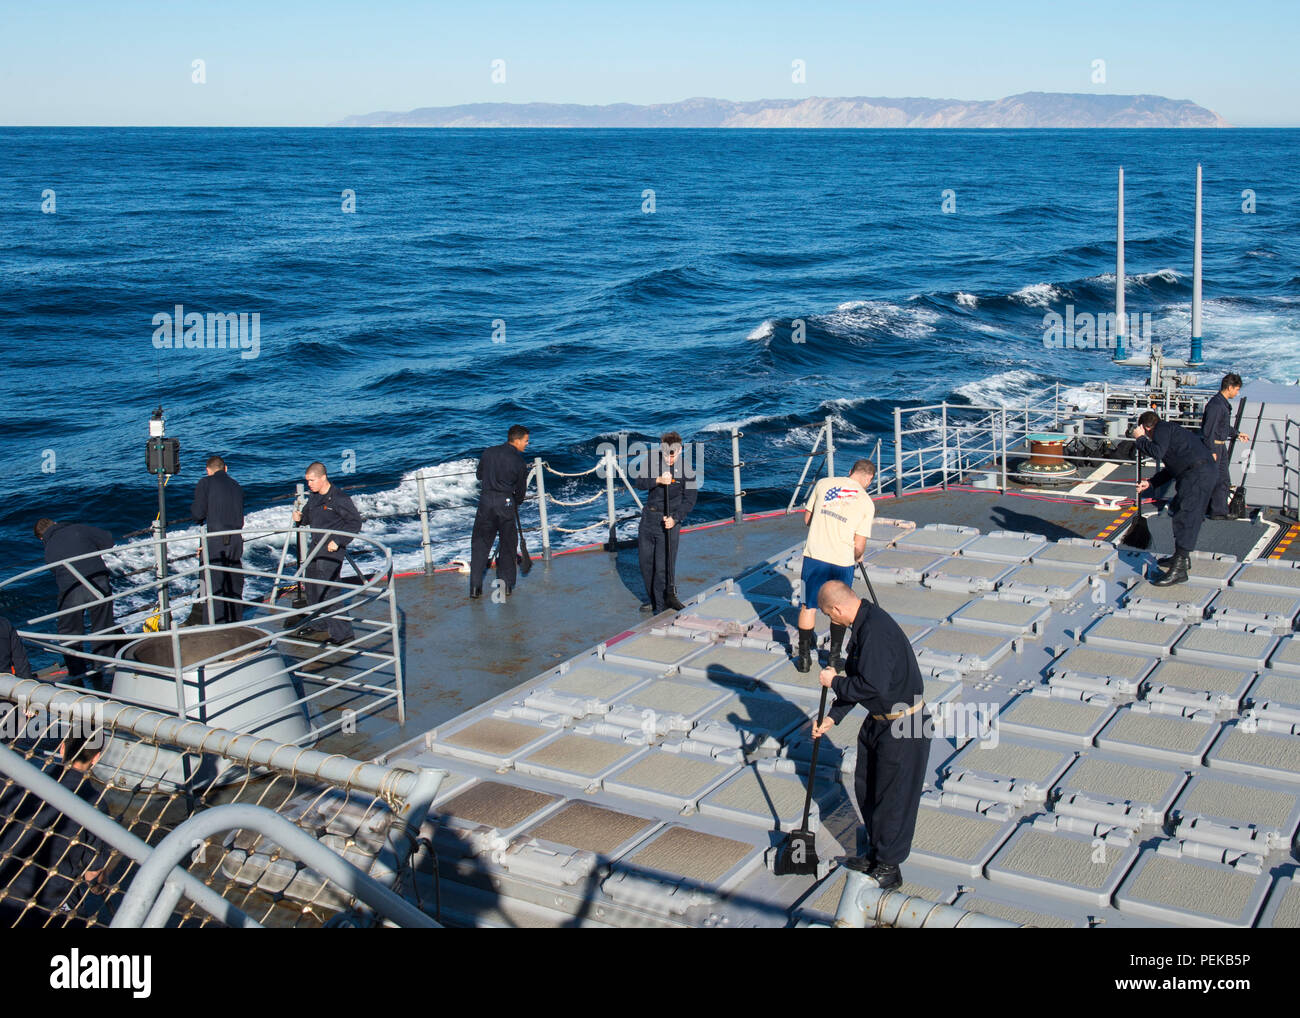 151215-N-GW139-001 PACIFIC OCEAN (Dec. 15, 2015) - Sailors